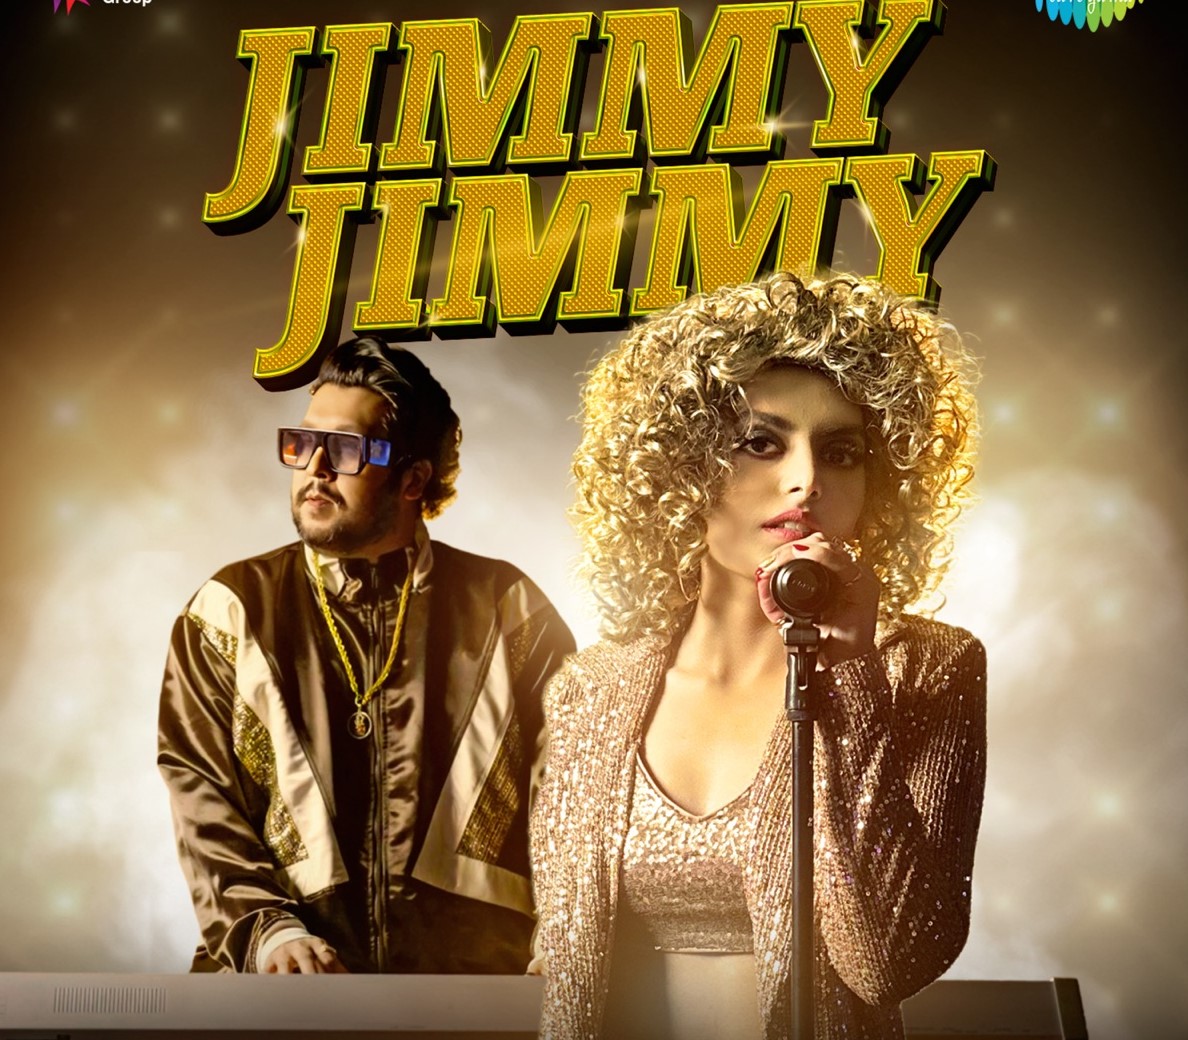 Shannon K and Bappa B Lahiri collaborate to recreate ‘Jimmy Jimmy’; pays homage to Bappi Lahiri